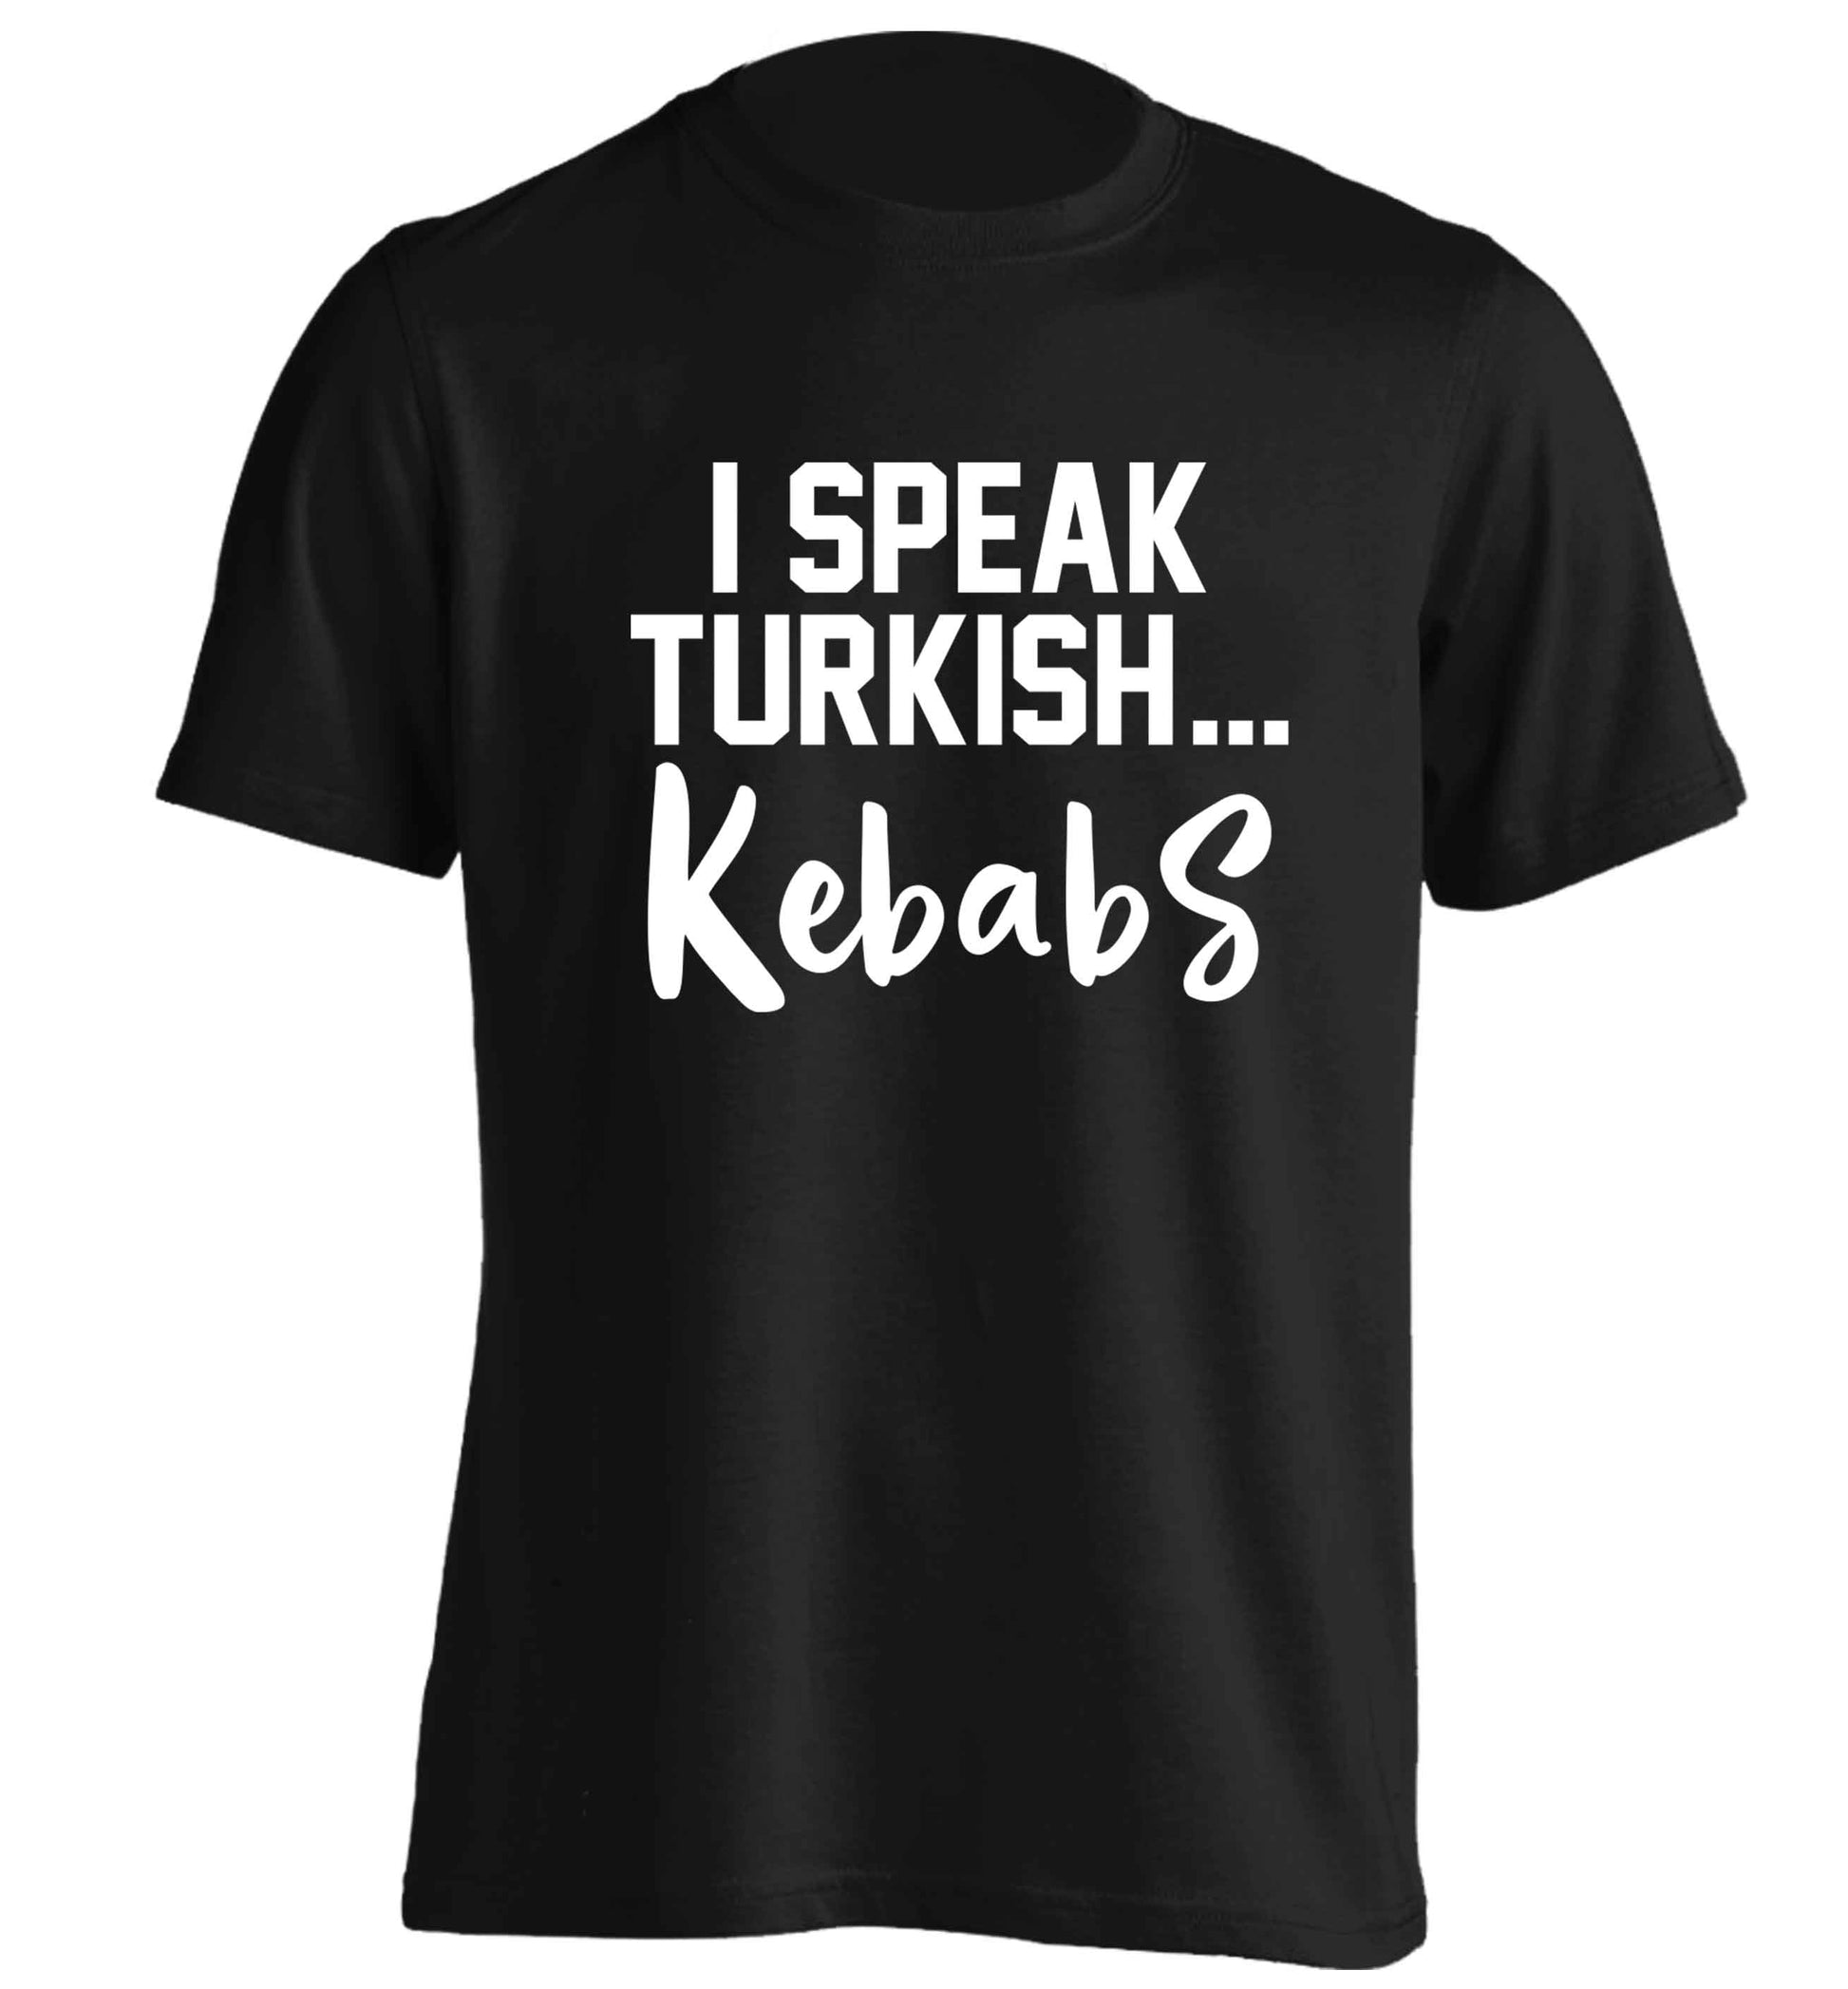 I speak Turkish...kebabs adults unisex black Tshirt 2XL